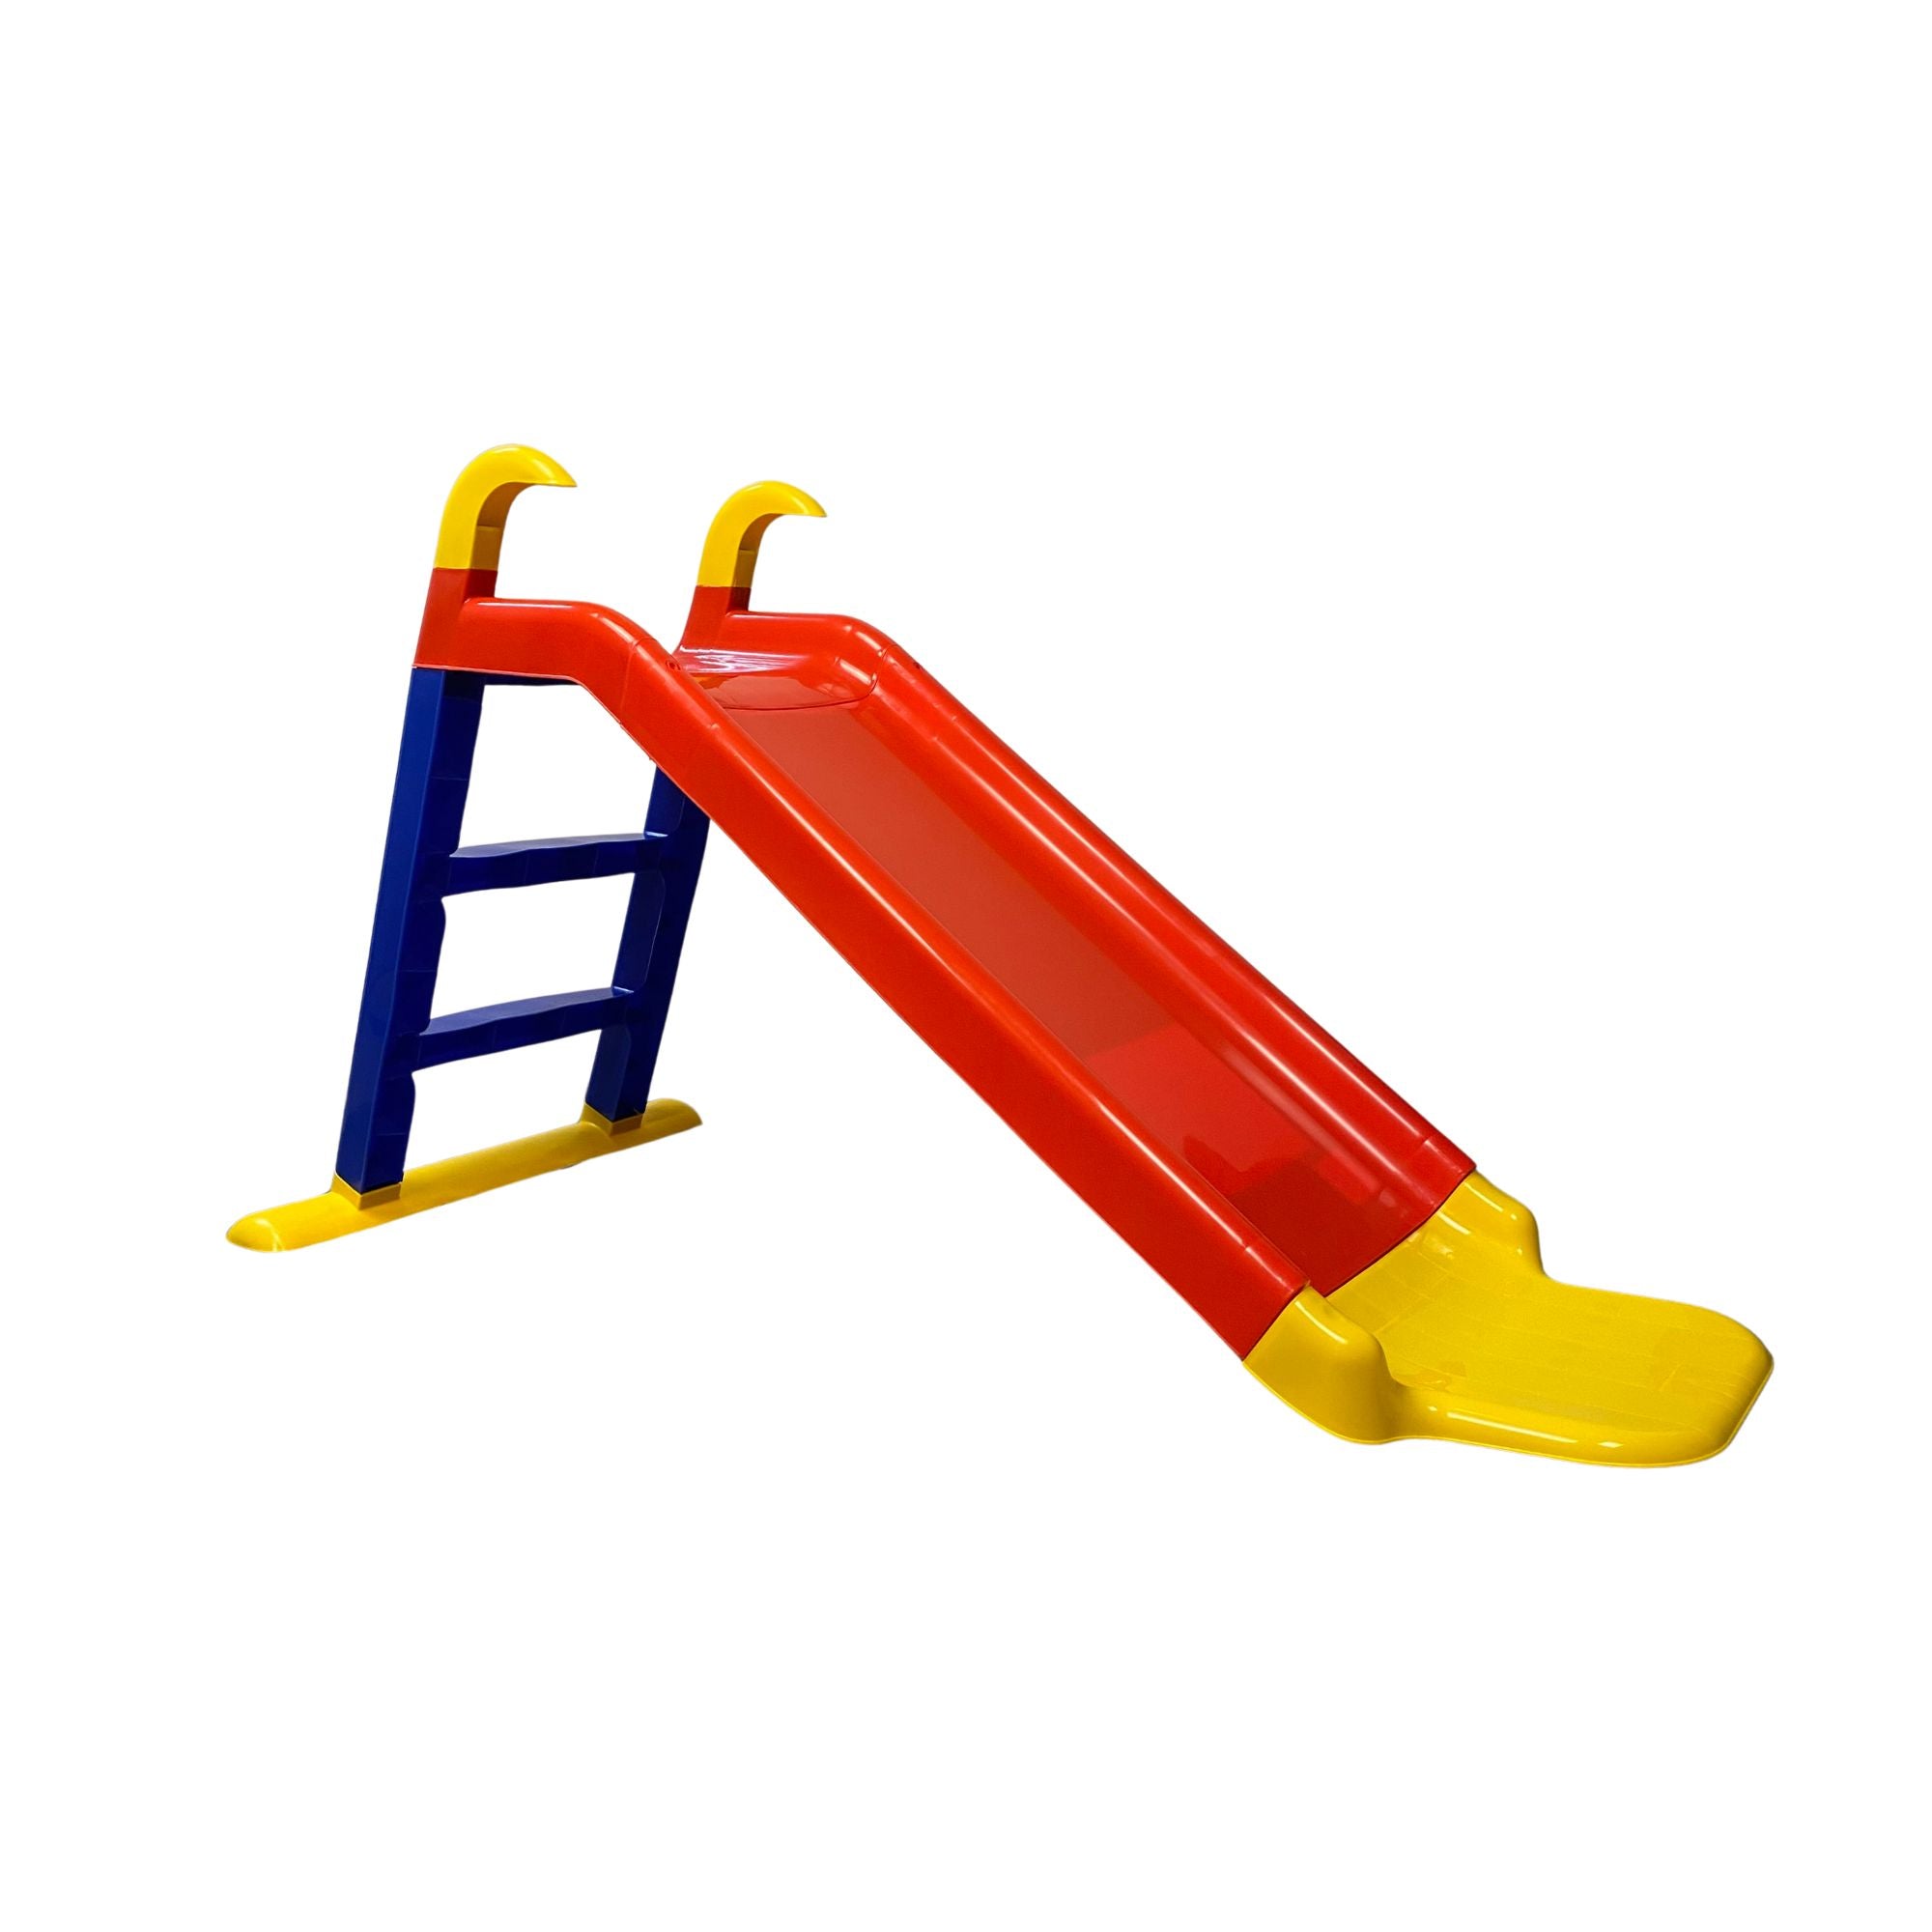 80cm Kids Indoor Outdoor Freestanding Plastic Slide with Ladder and Extension